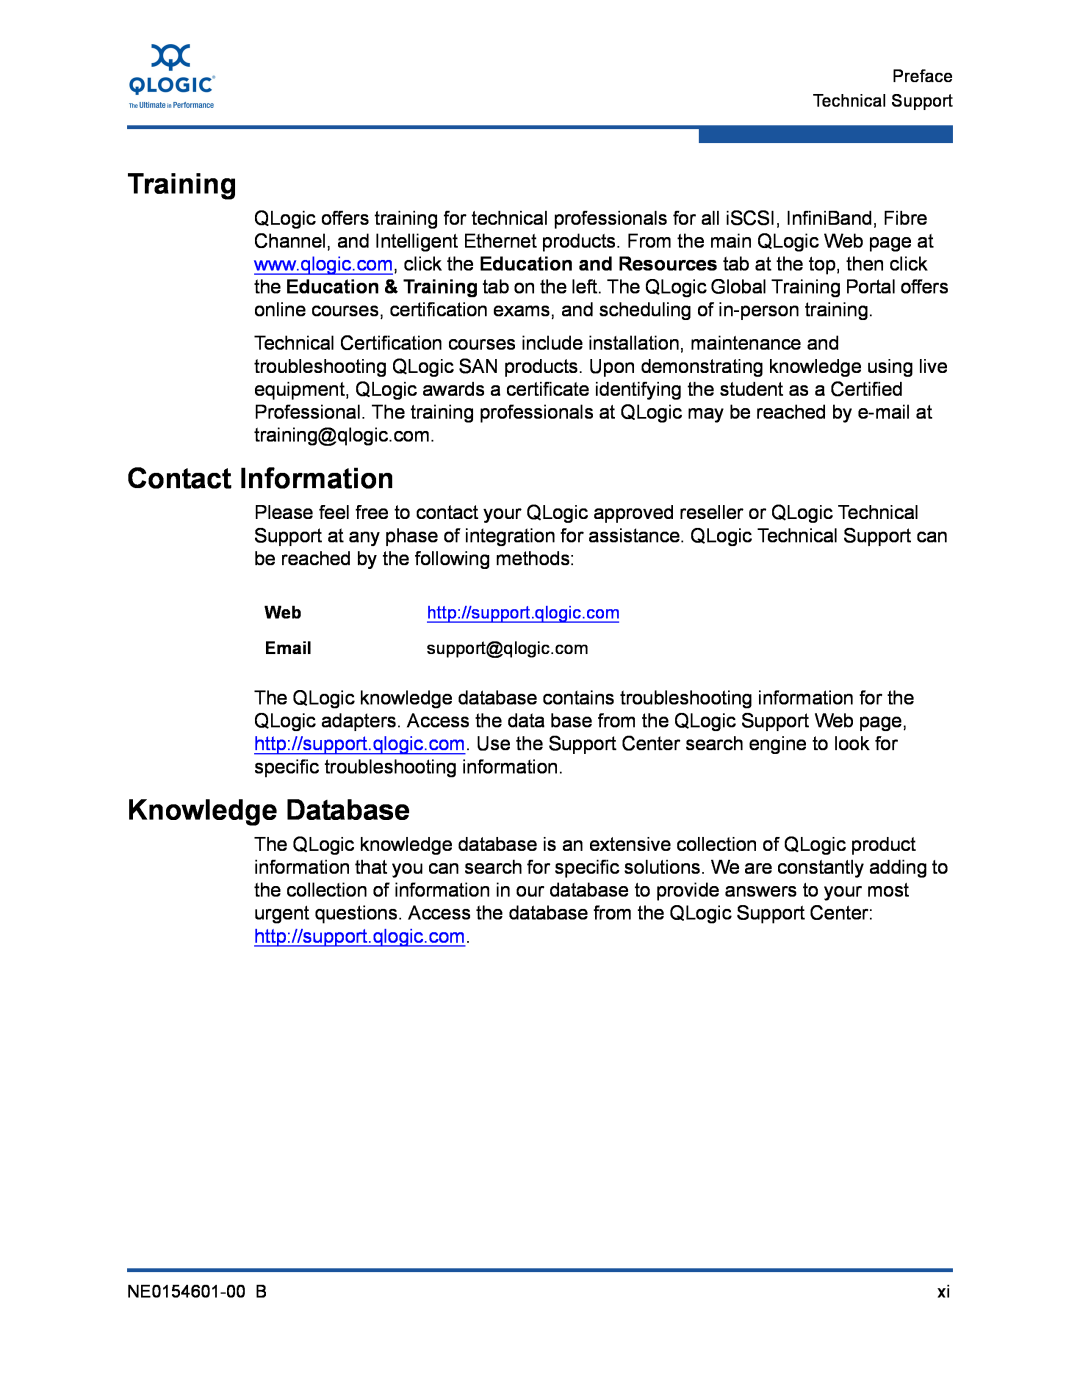 Q-Logic 3000, 3100 manual Training, Contact Information, Knowledge Database, Webhttp//support.qlogic.com 